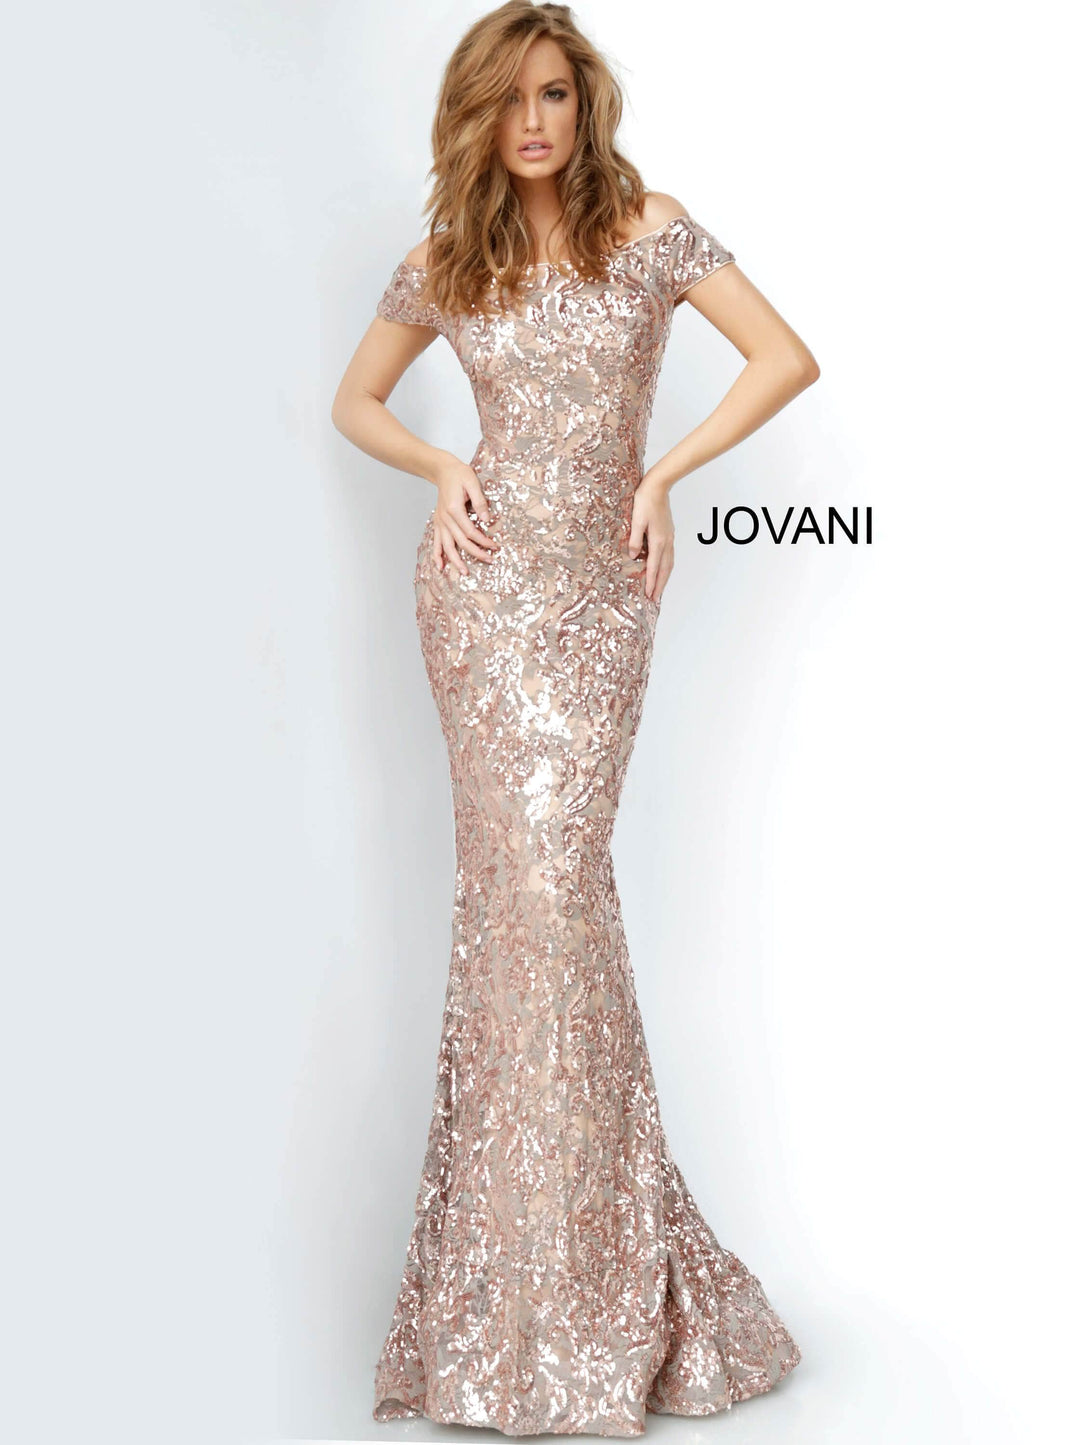 Jovani 1122 Dress - FOSTANI